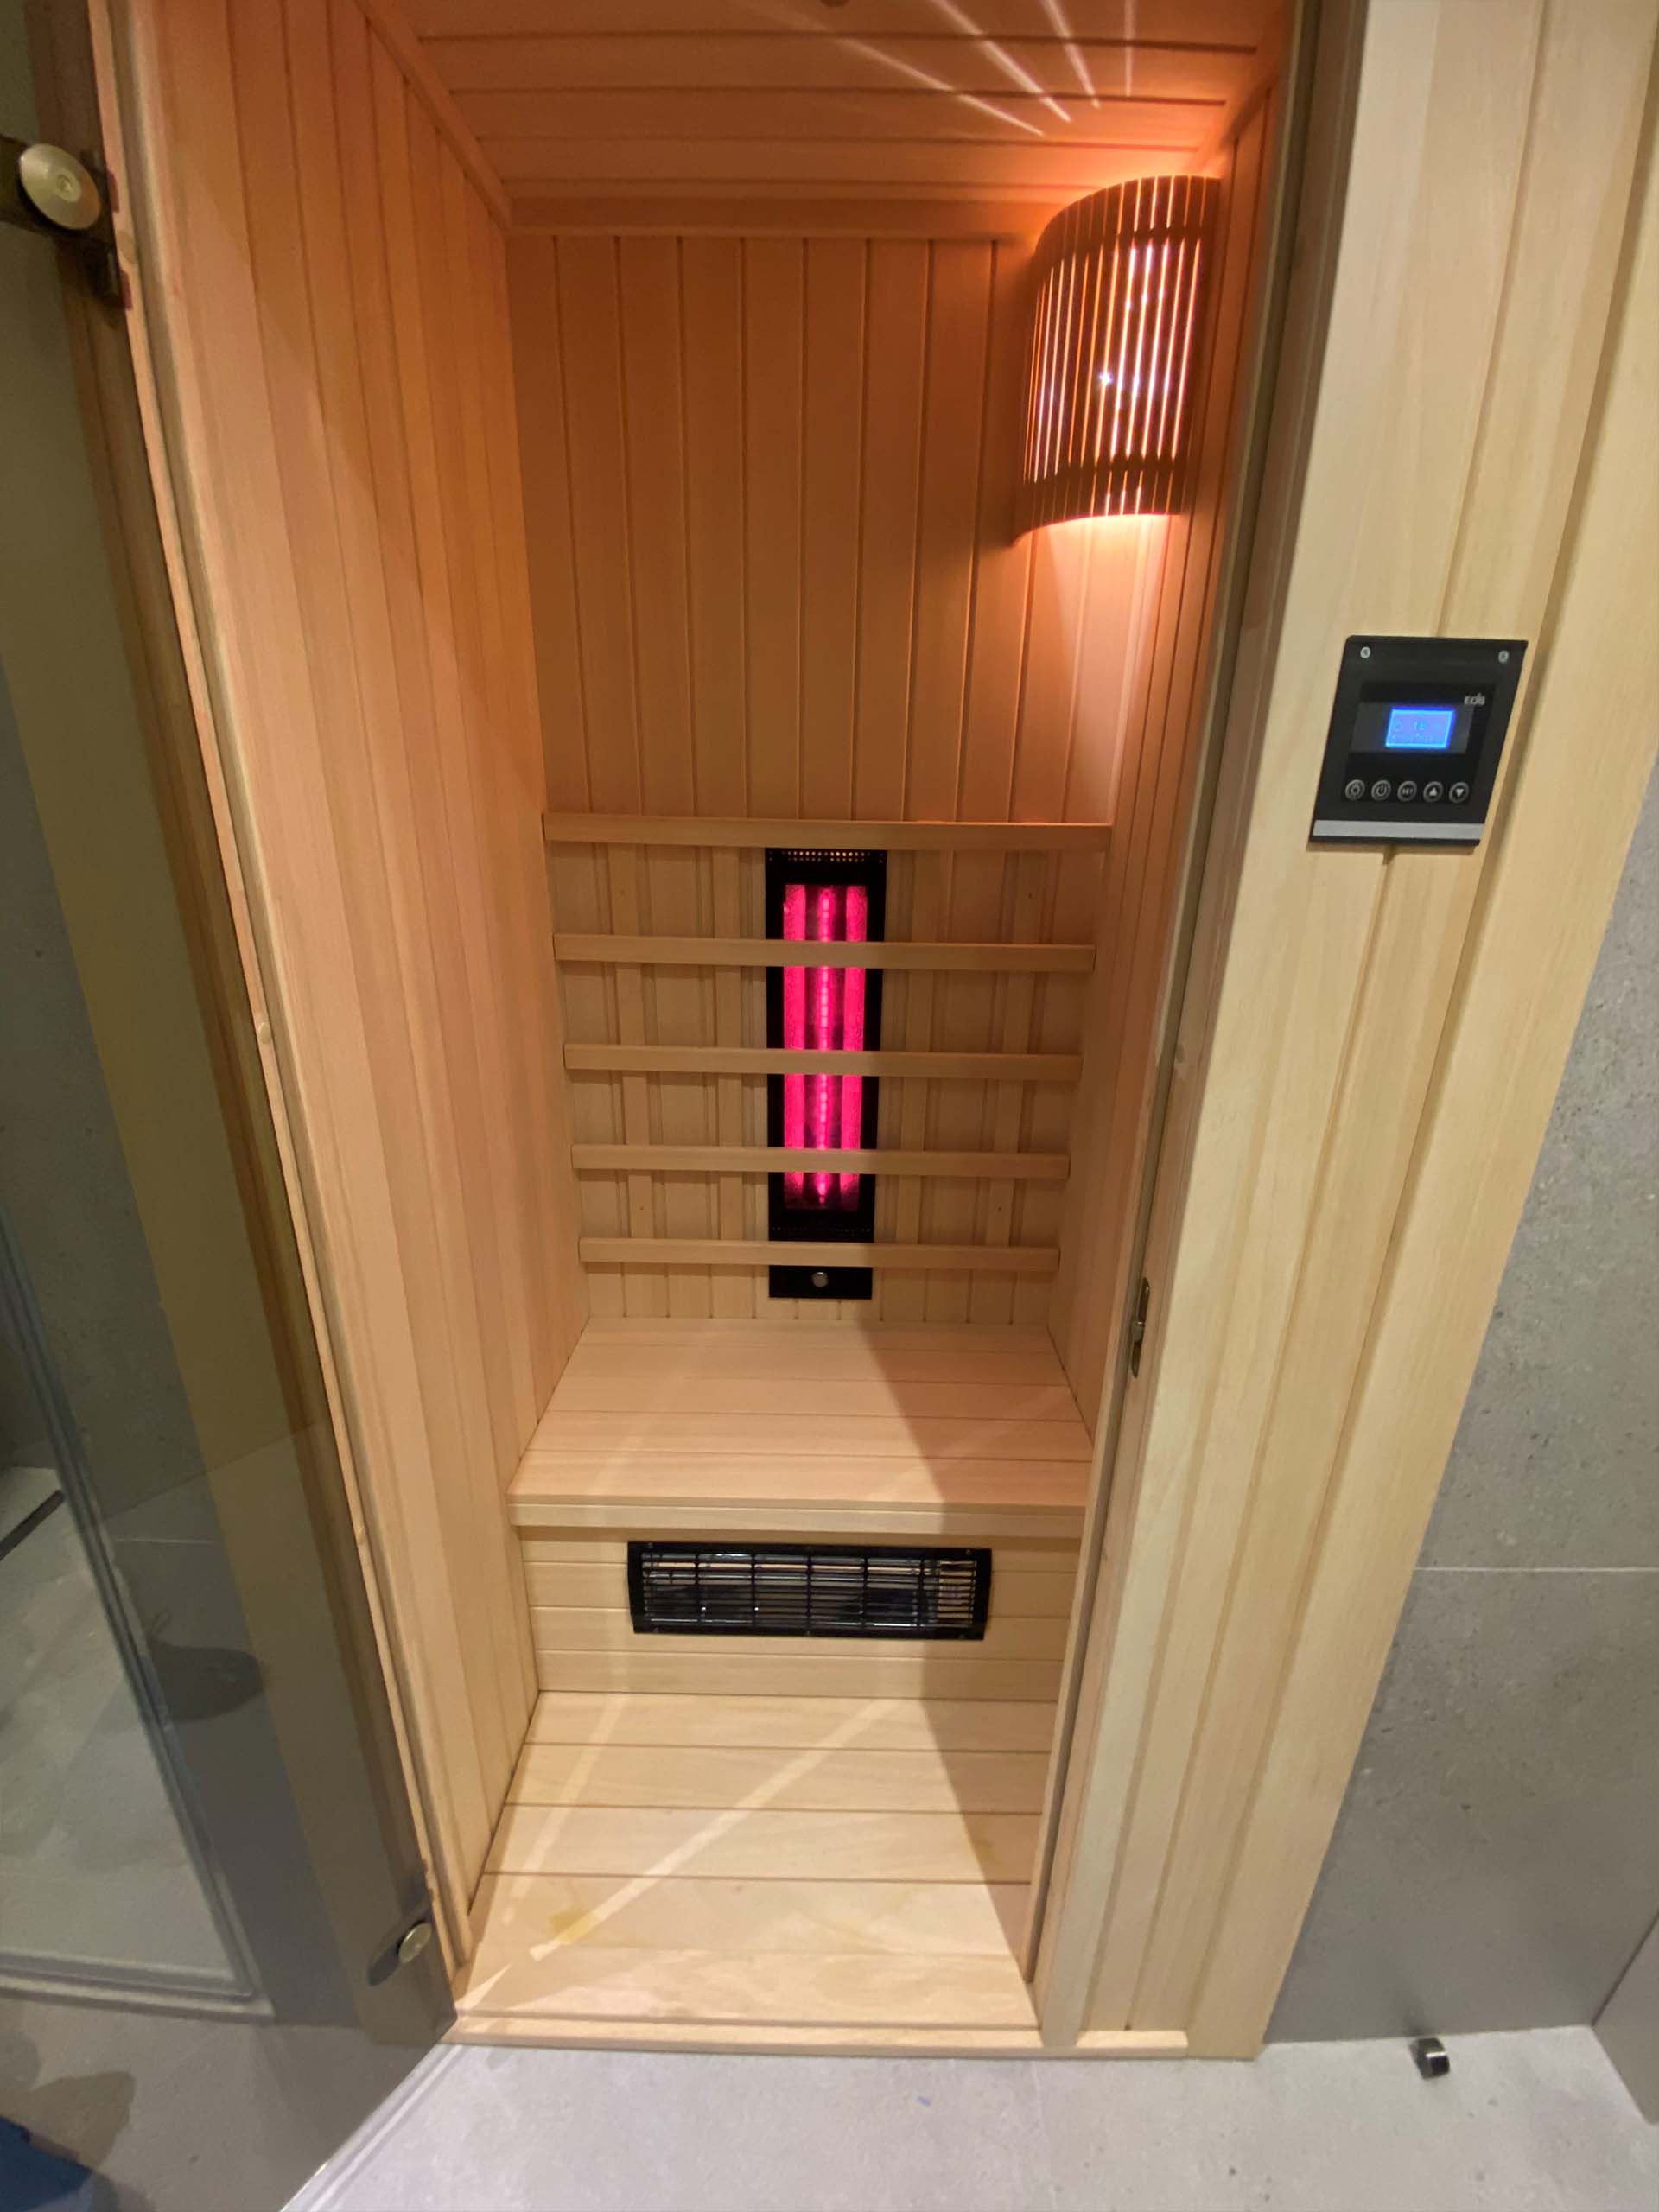 Berlin Infrared Sauna: Luxurious Infrared Design, Craftsmanship, and Affordability